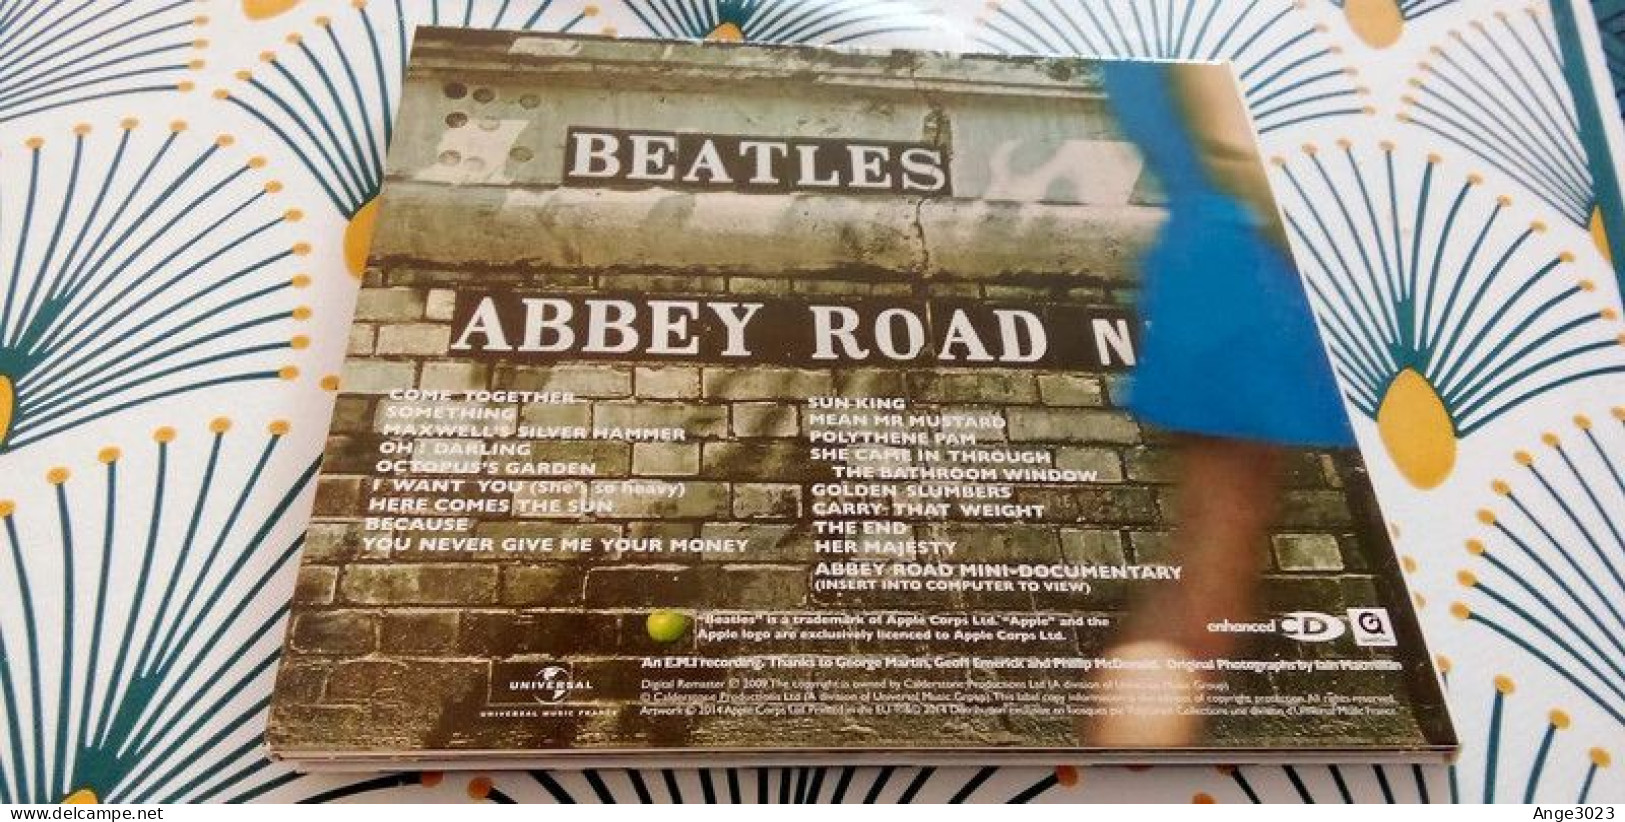 THE BEATLES "Abbey Road" - Rock